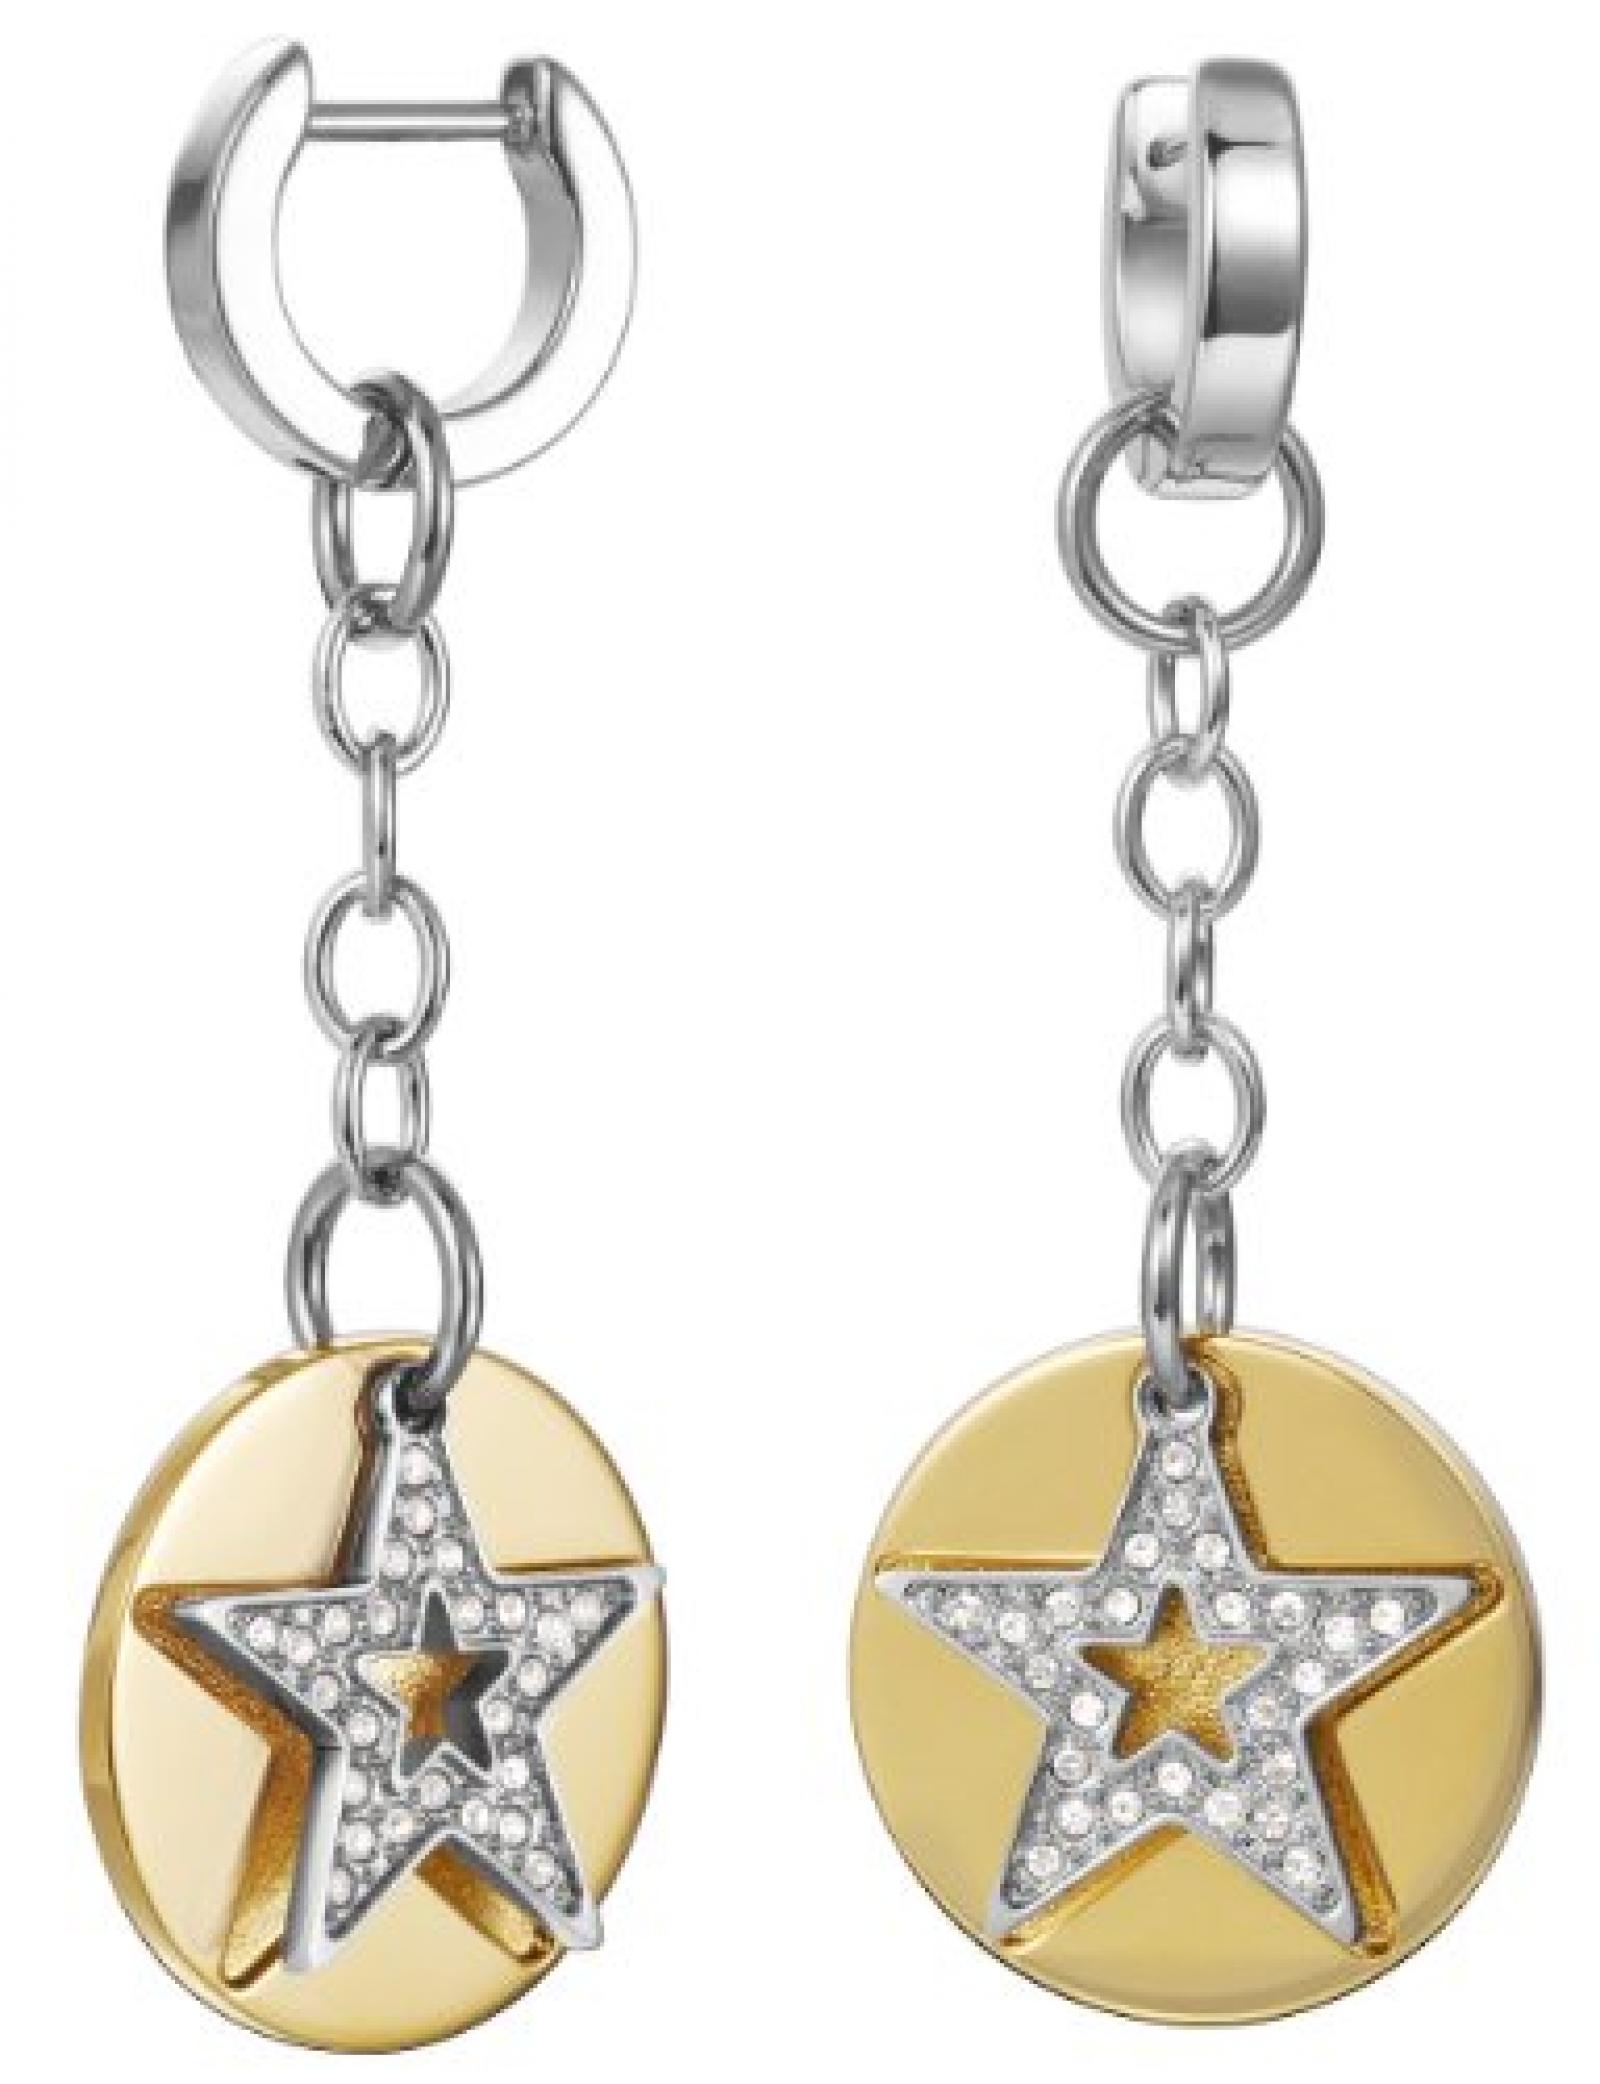 Esprit Damen-Creolen Edelstahl rhodiniert Kristall Zirkonia Great Star Gold weiß ESCO11494B000 